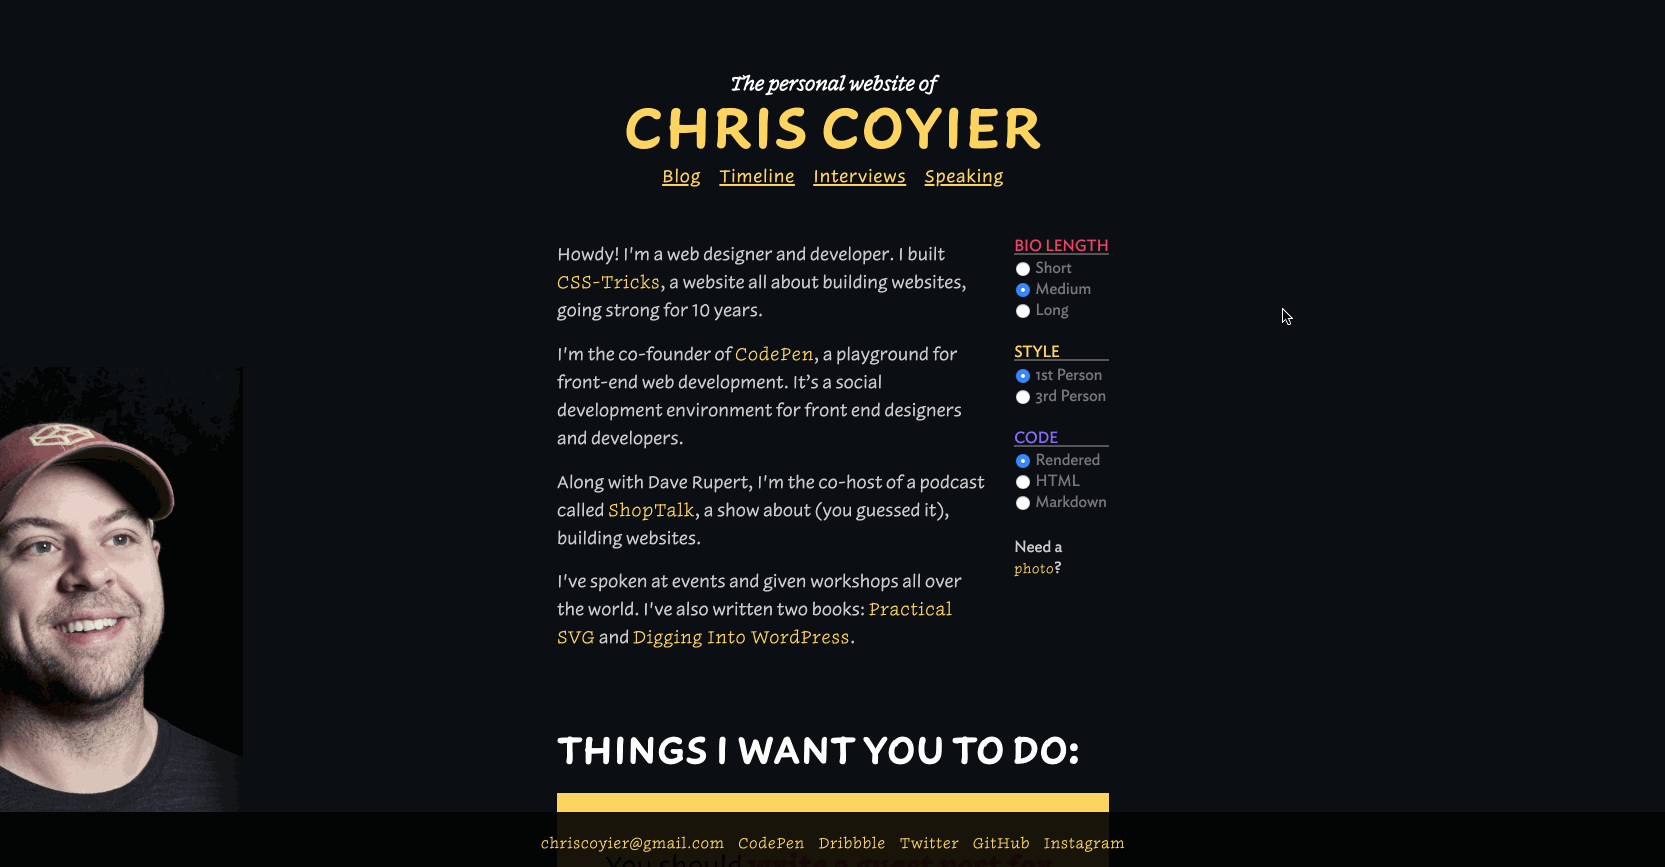 Chris Coyier's website form